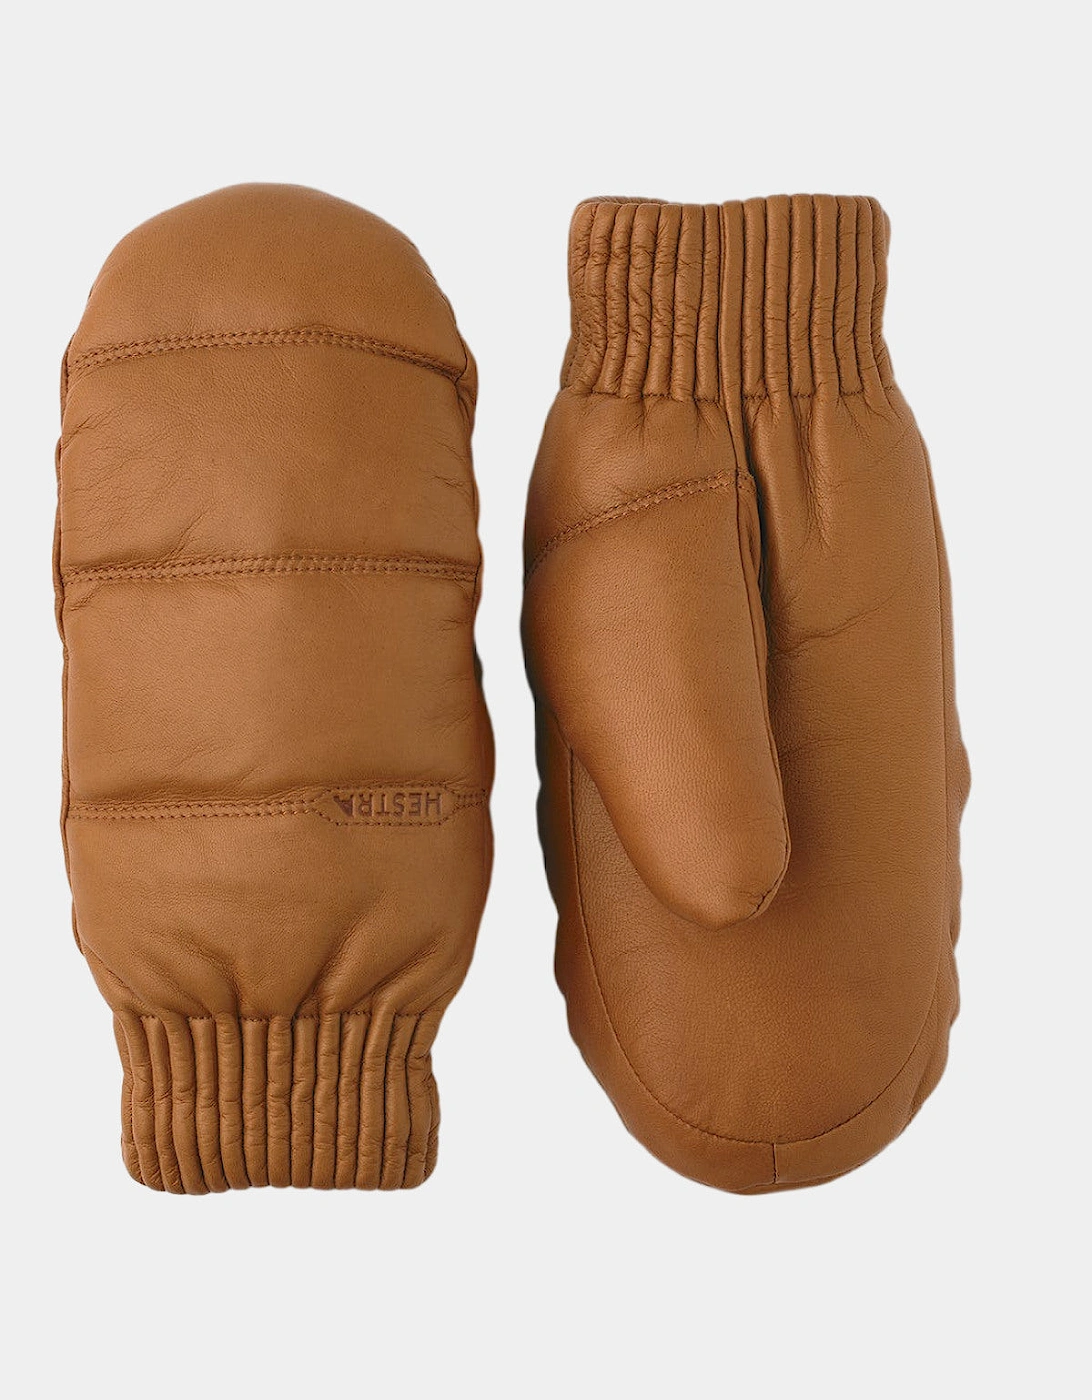 Valdres Gloves - Cork, 5 of 4